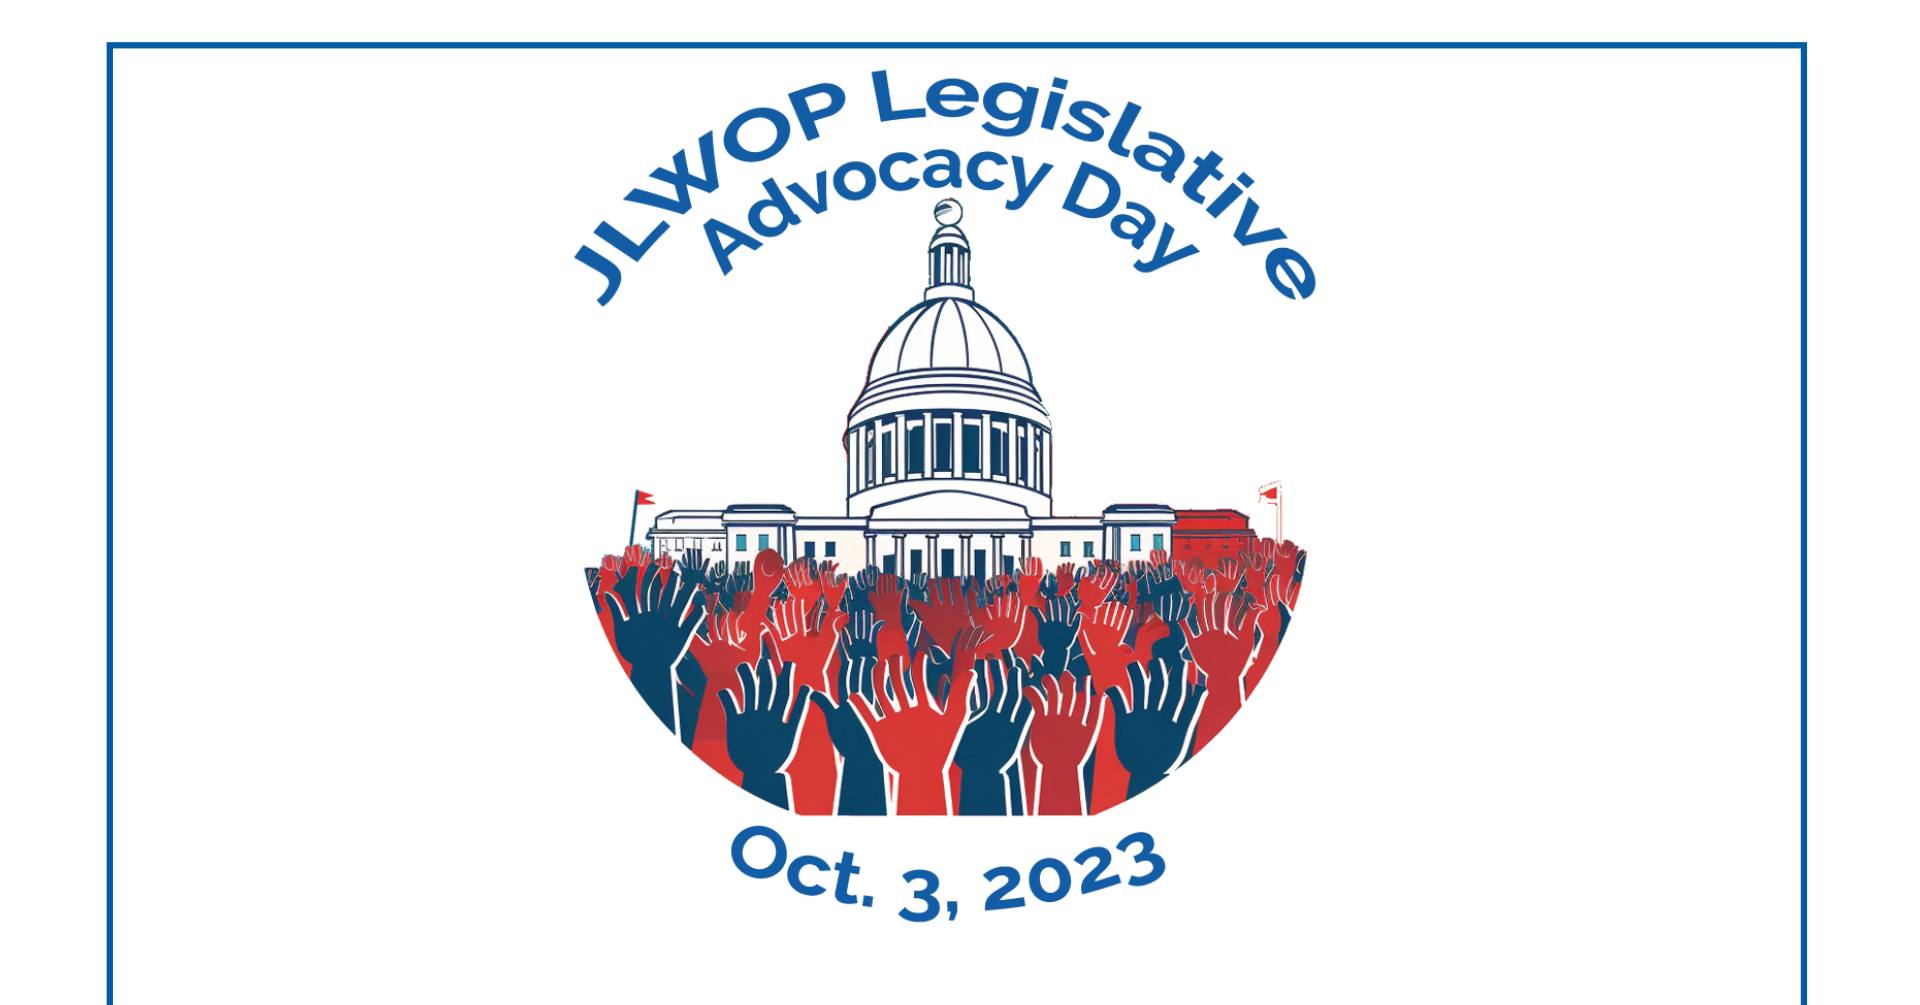 #EndJLWOP Legislative Advocacy Day at Michigan State Capitol